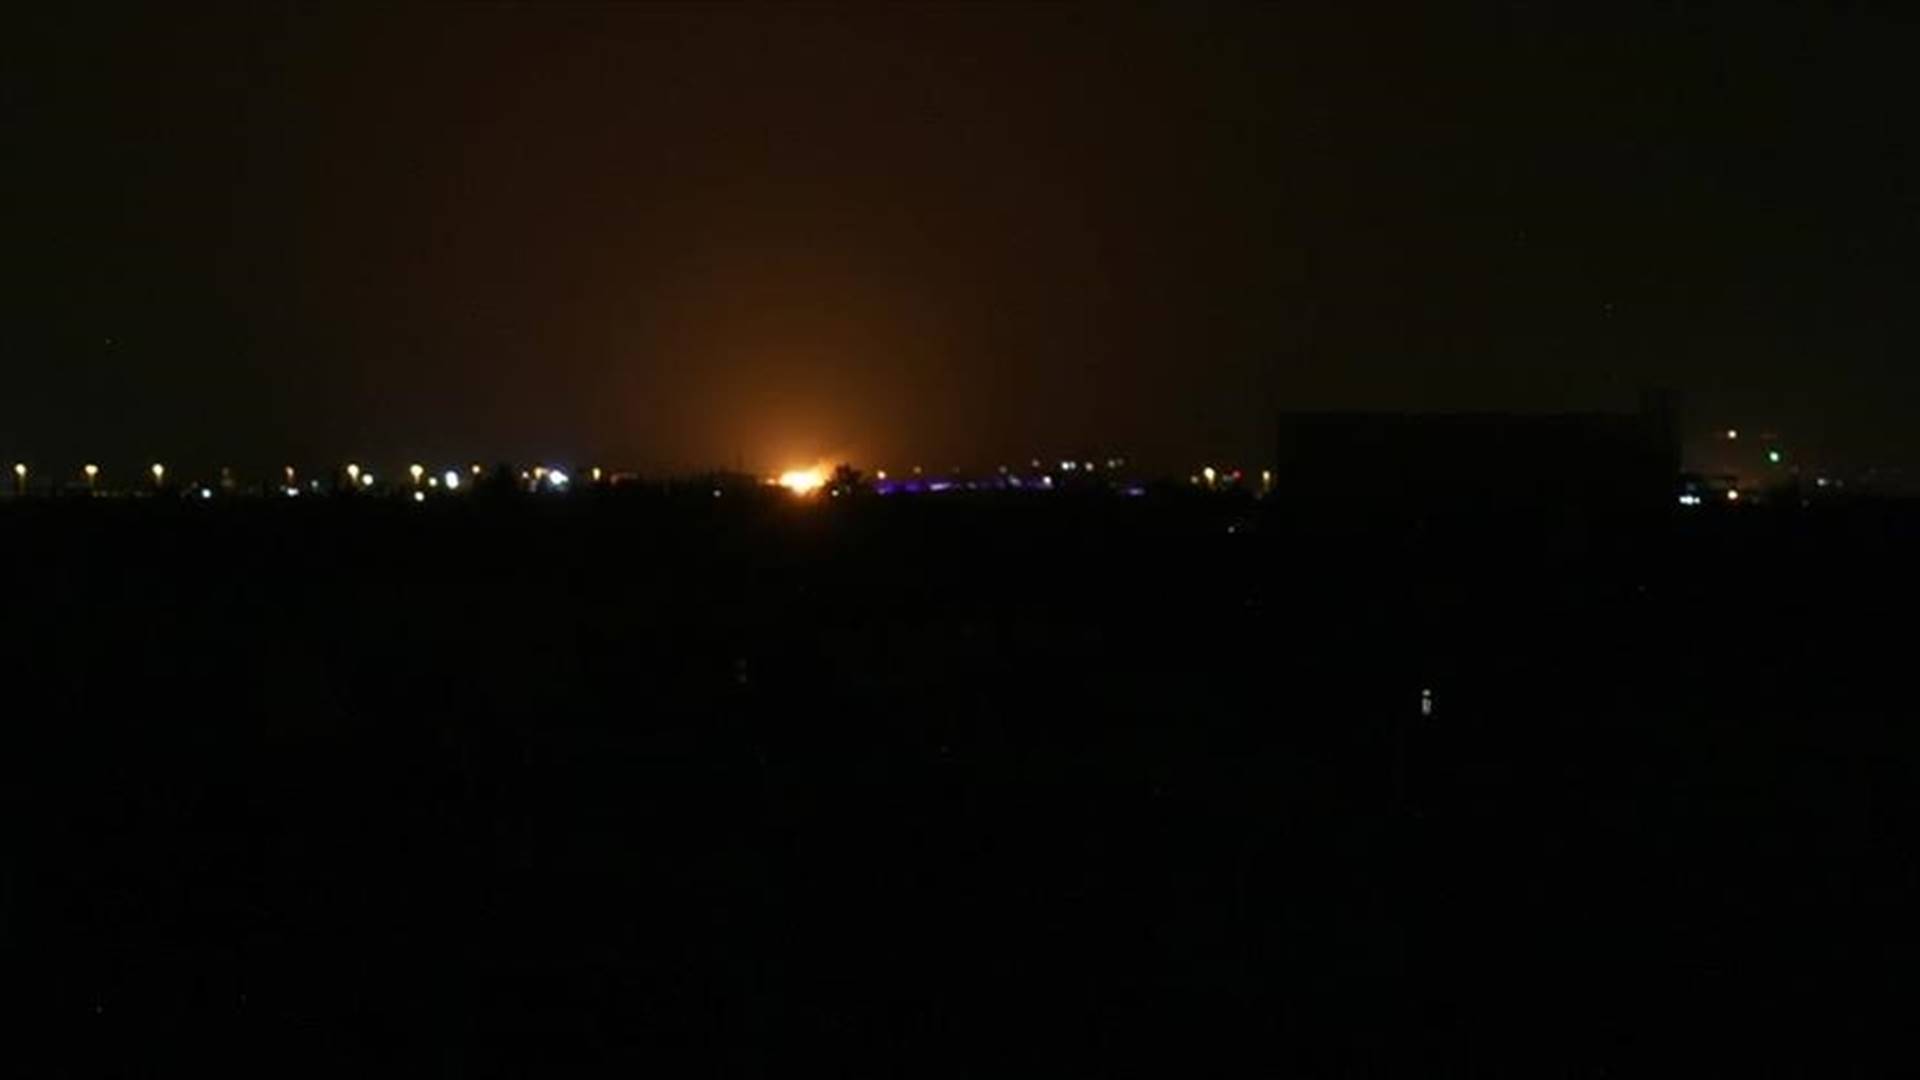 Israel hits Syria's capital, Homs in an airstrike: Regime